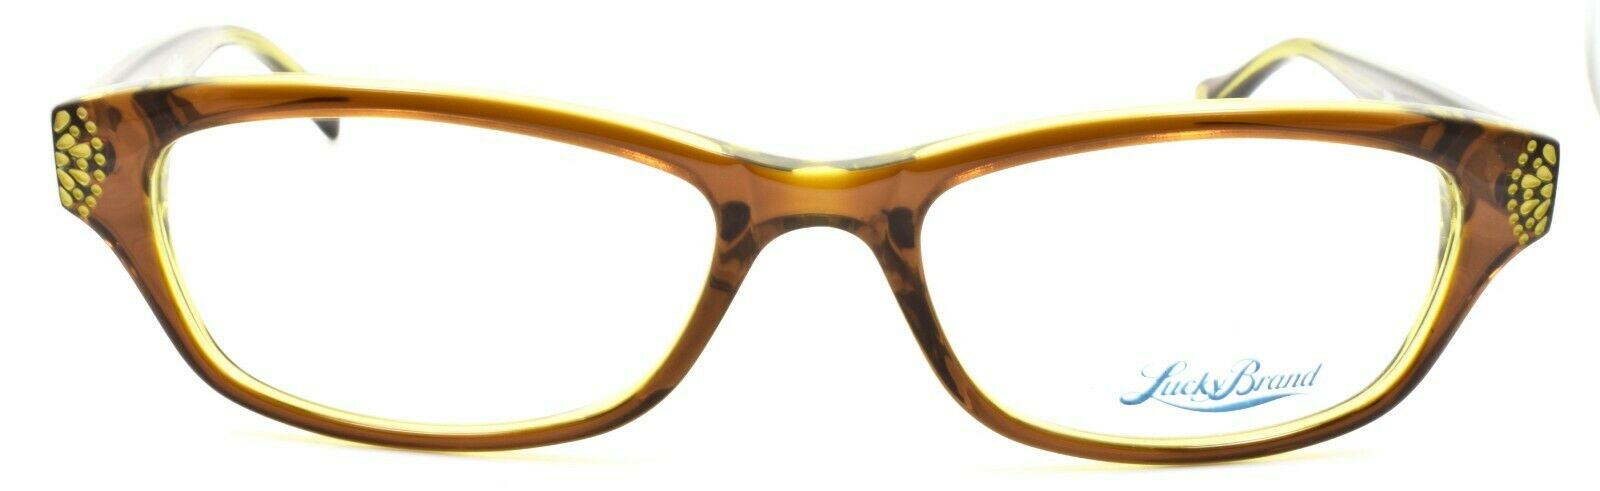 2-LUCKY BRAND Swirl Women's Eyeglasses Frames 53-17-135 Brown + CASE-751286267884-IKSpecs